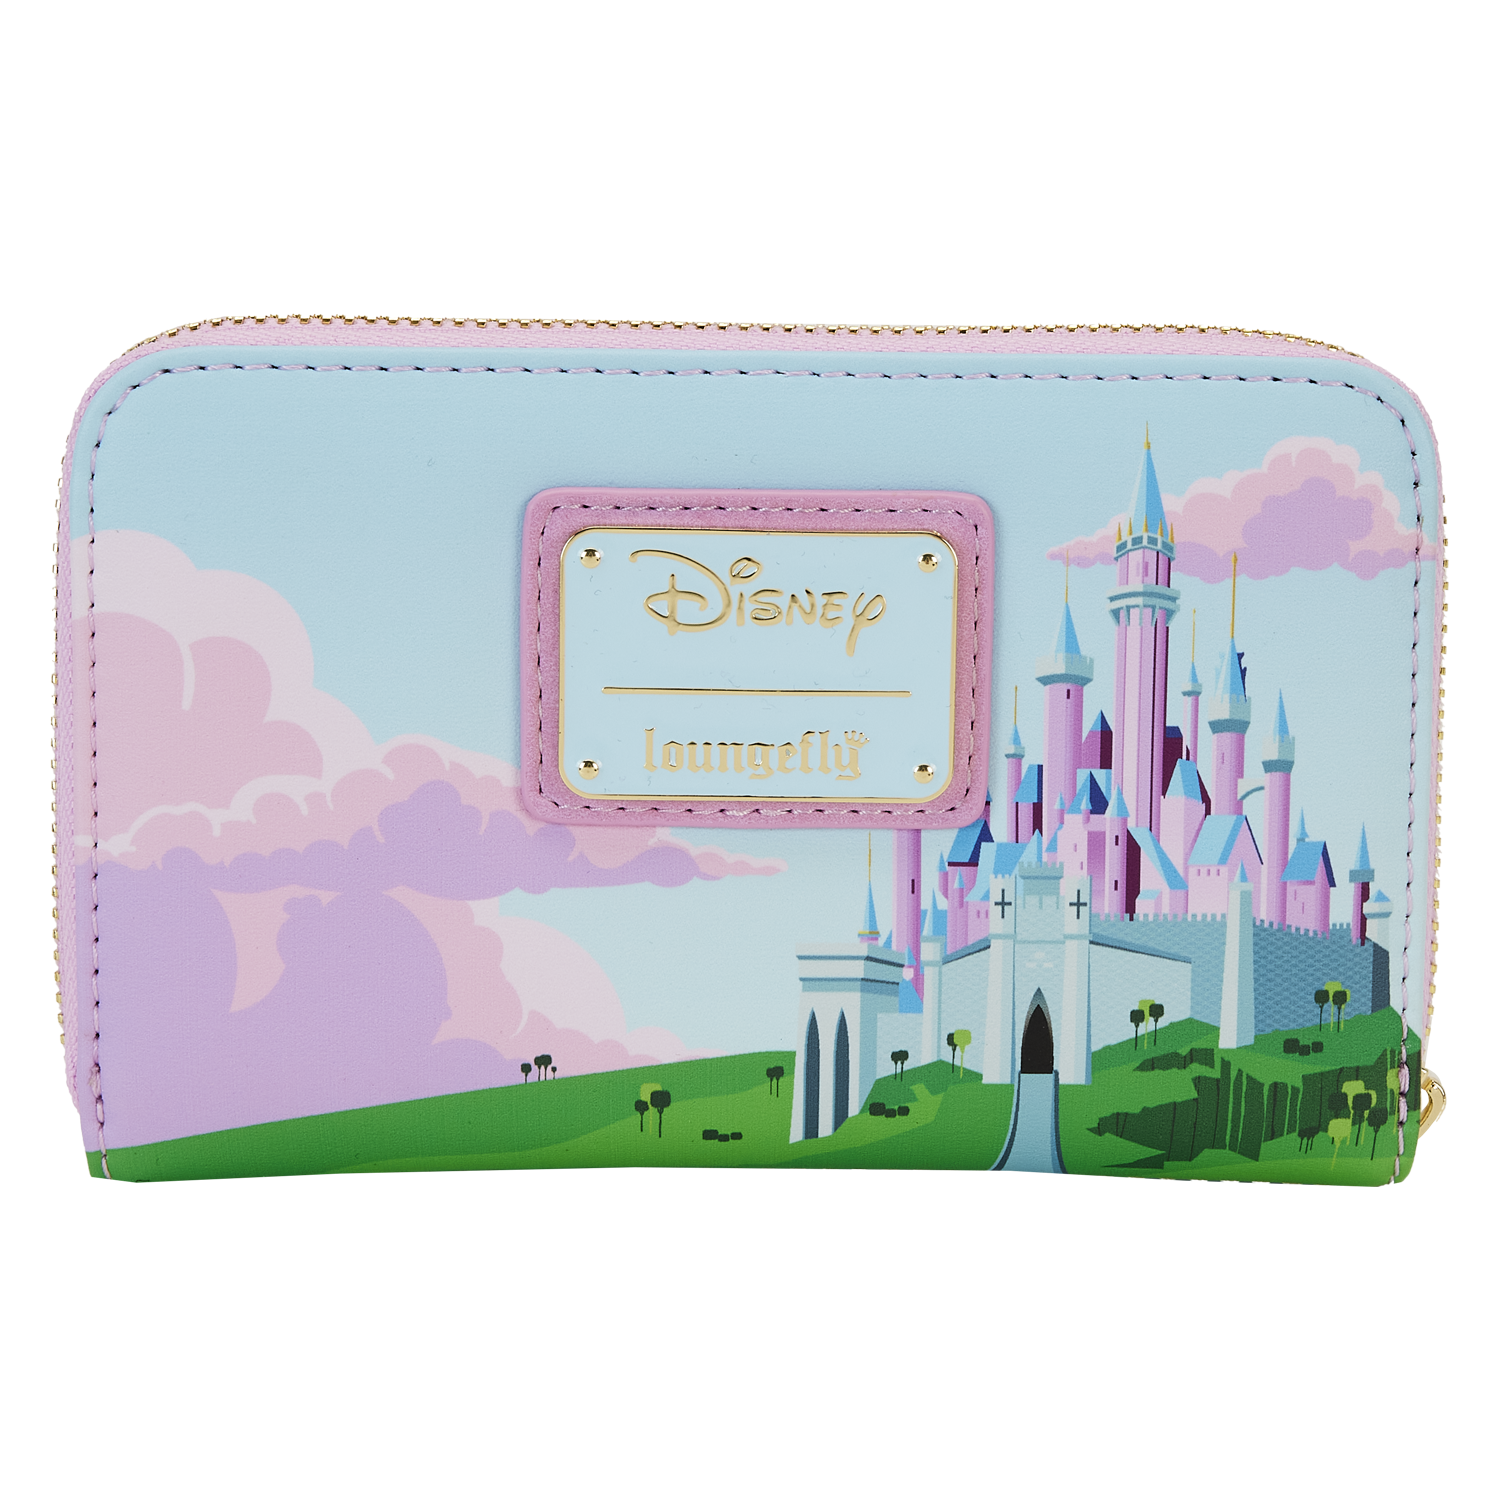 Disney | Sleeping Beauty Stained Glass Castle Zip Around Wallet